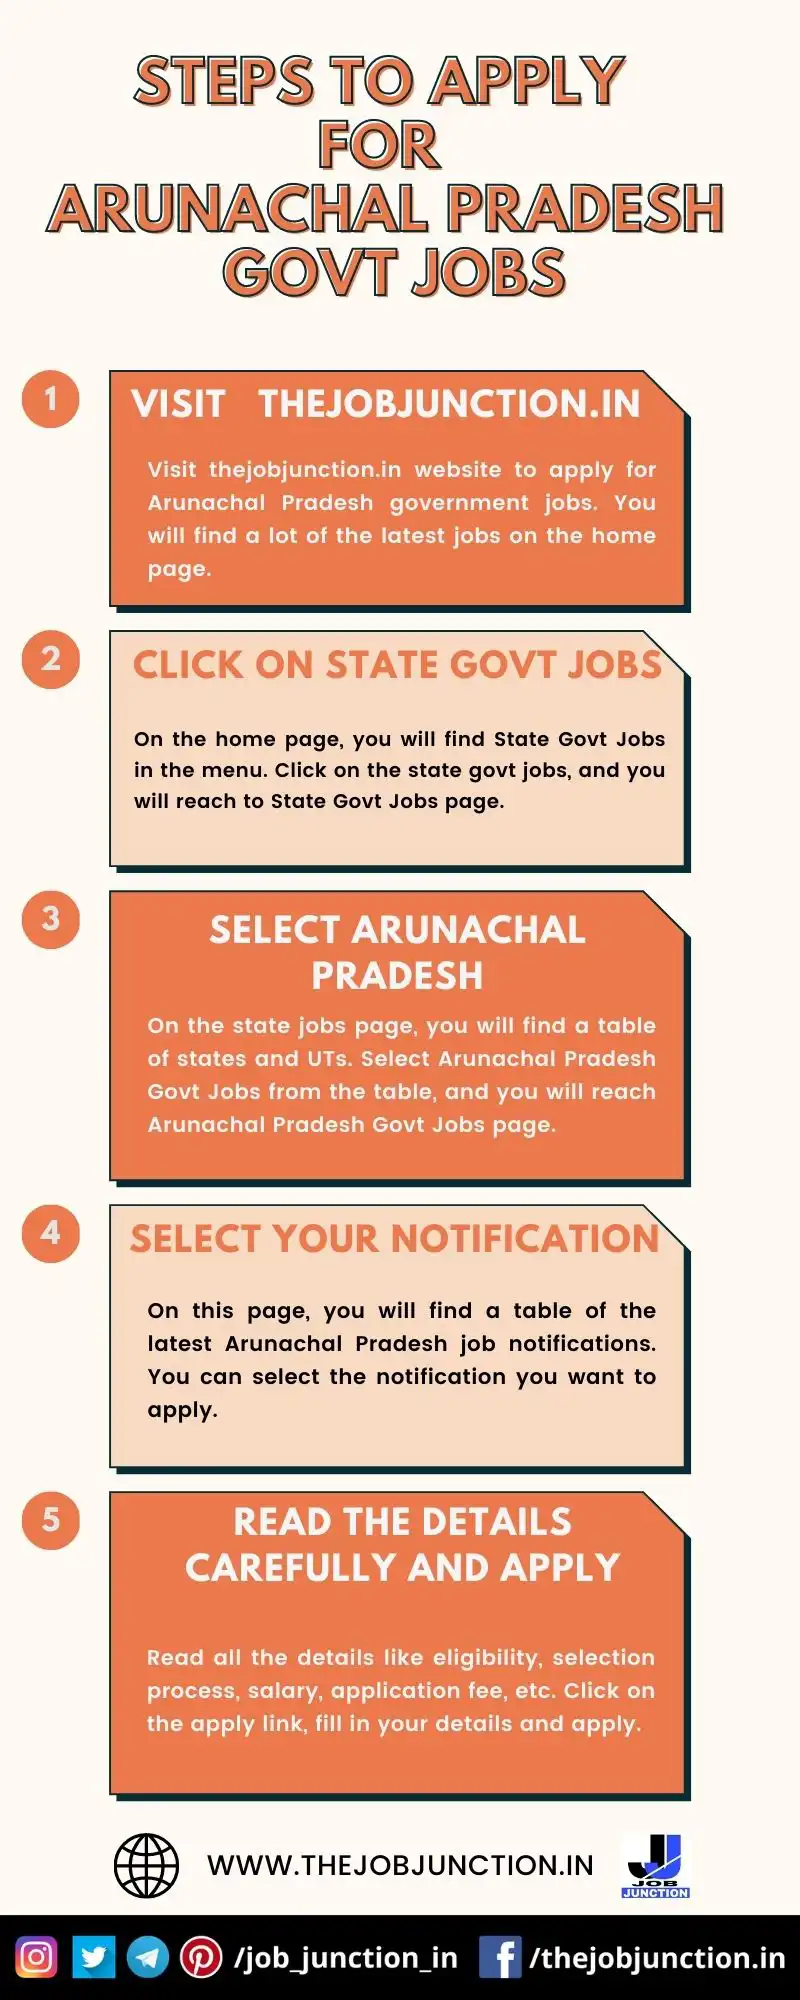 STEPS TO APPLY FOR ARUNACHAL PRADESH GOVT JOBS